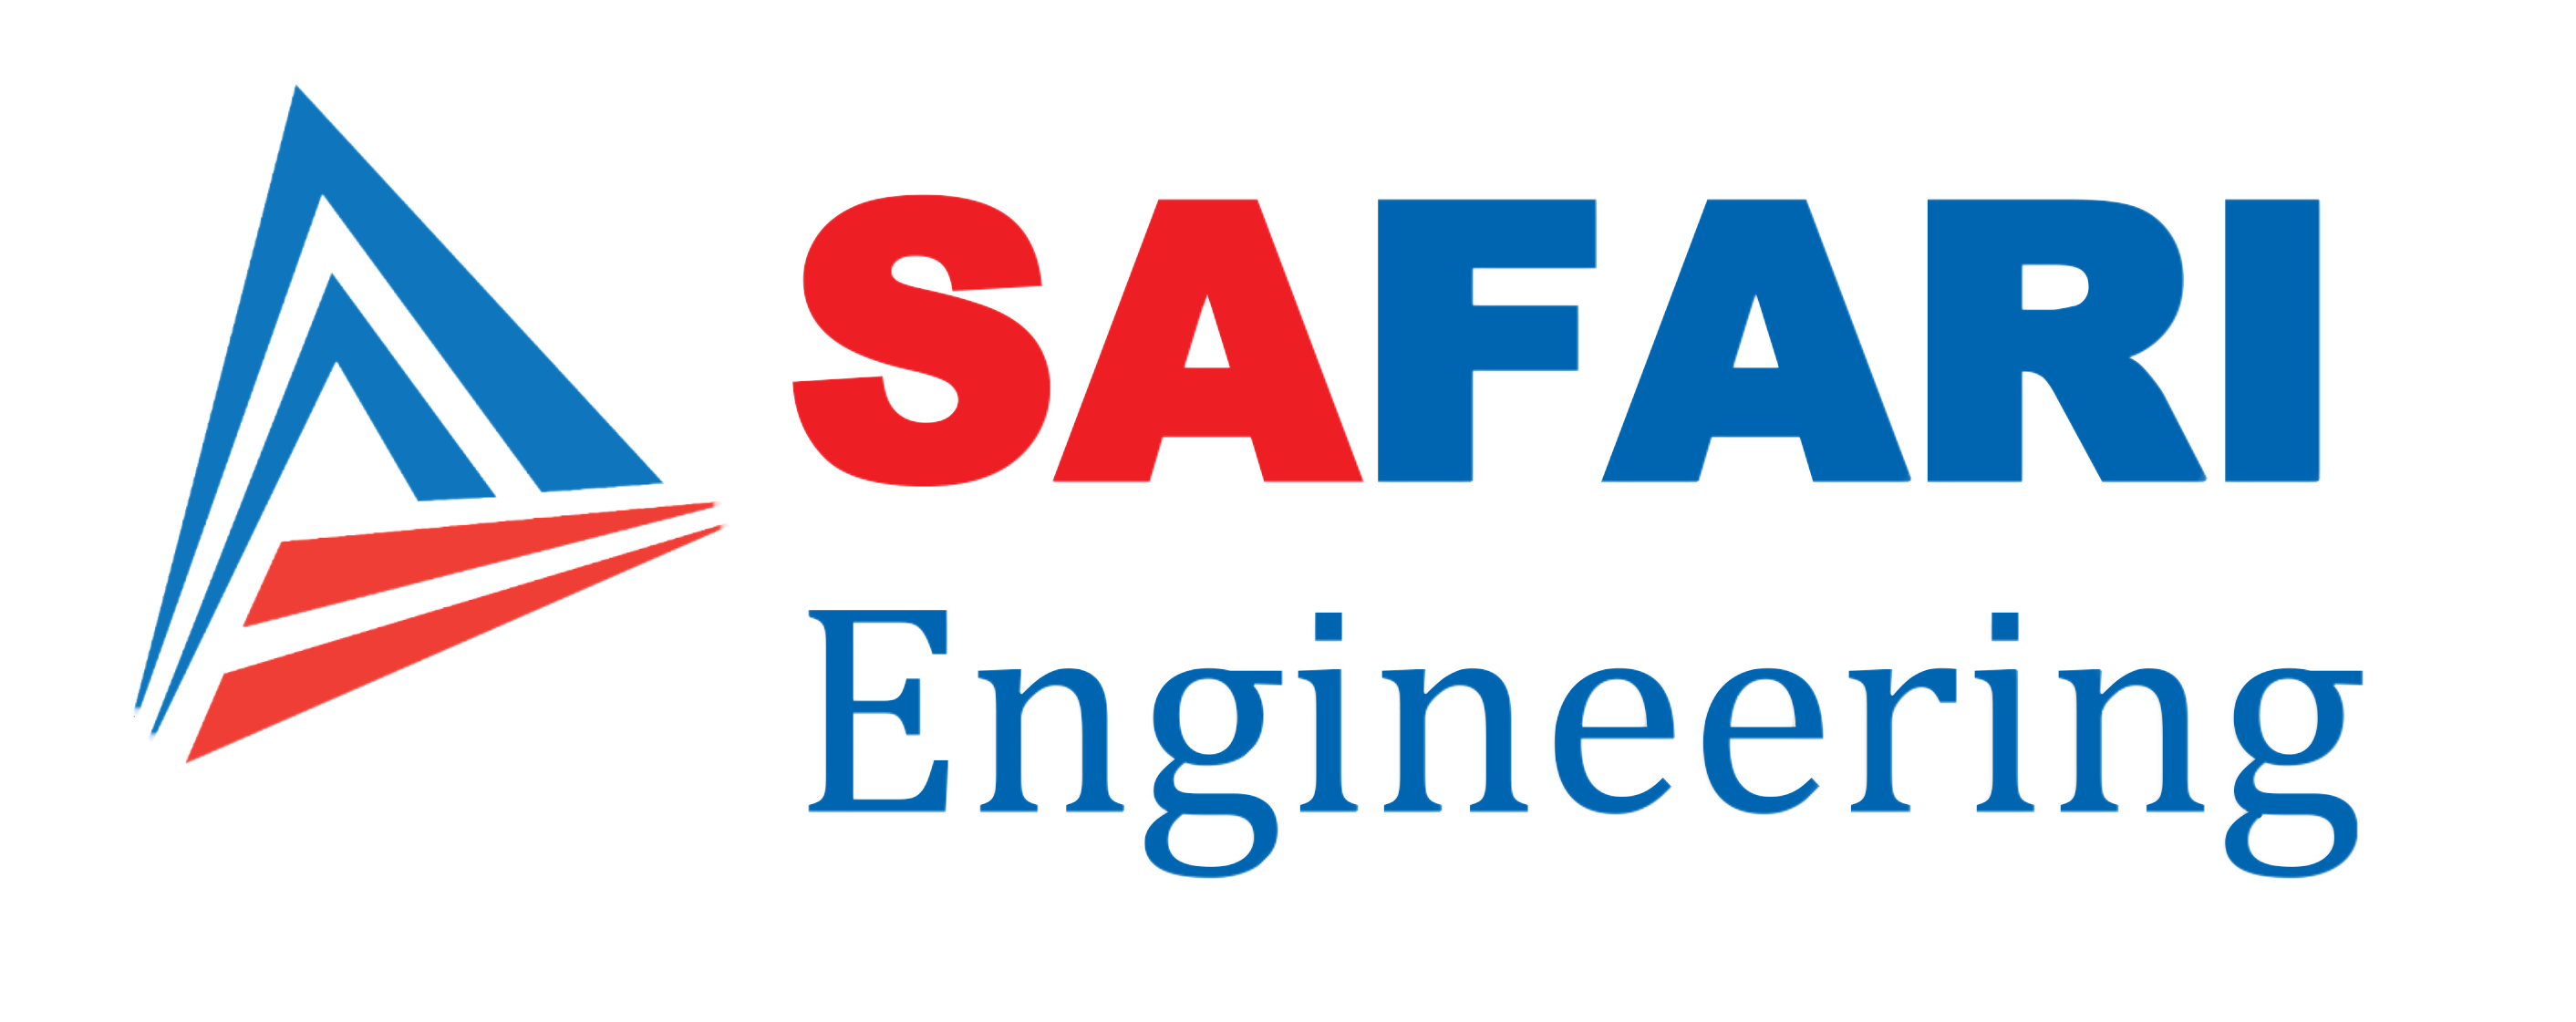 Safari Engineering